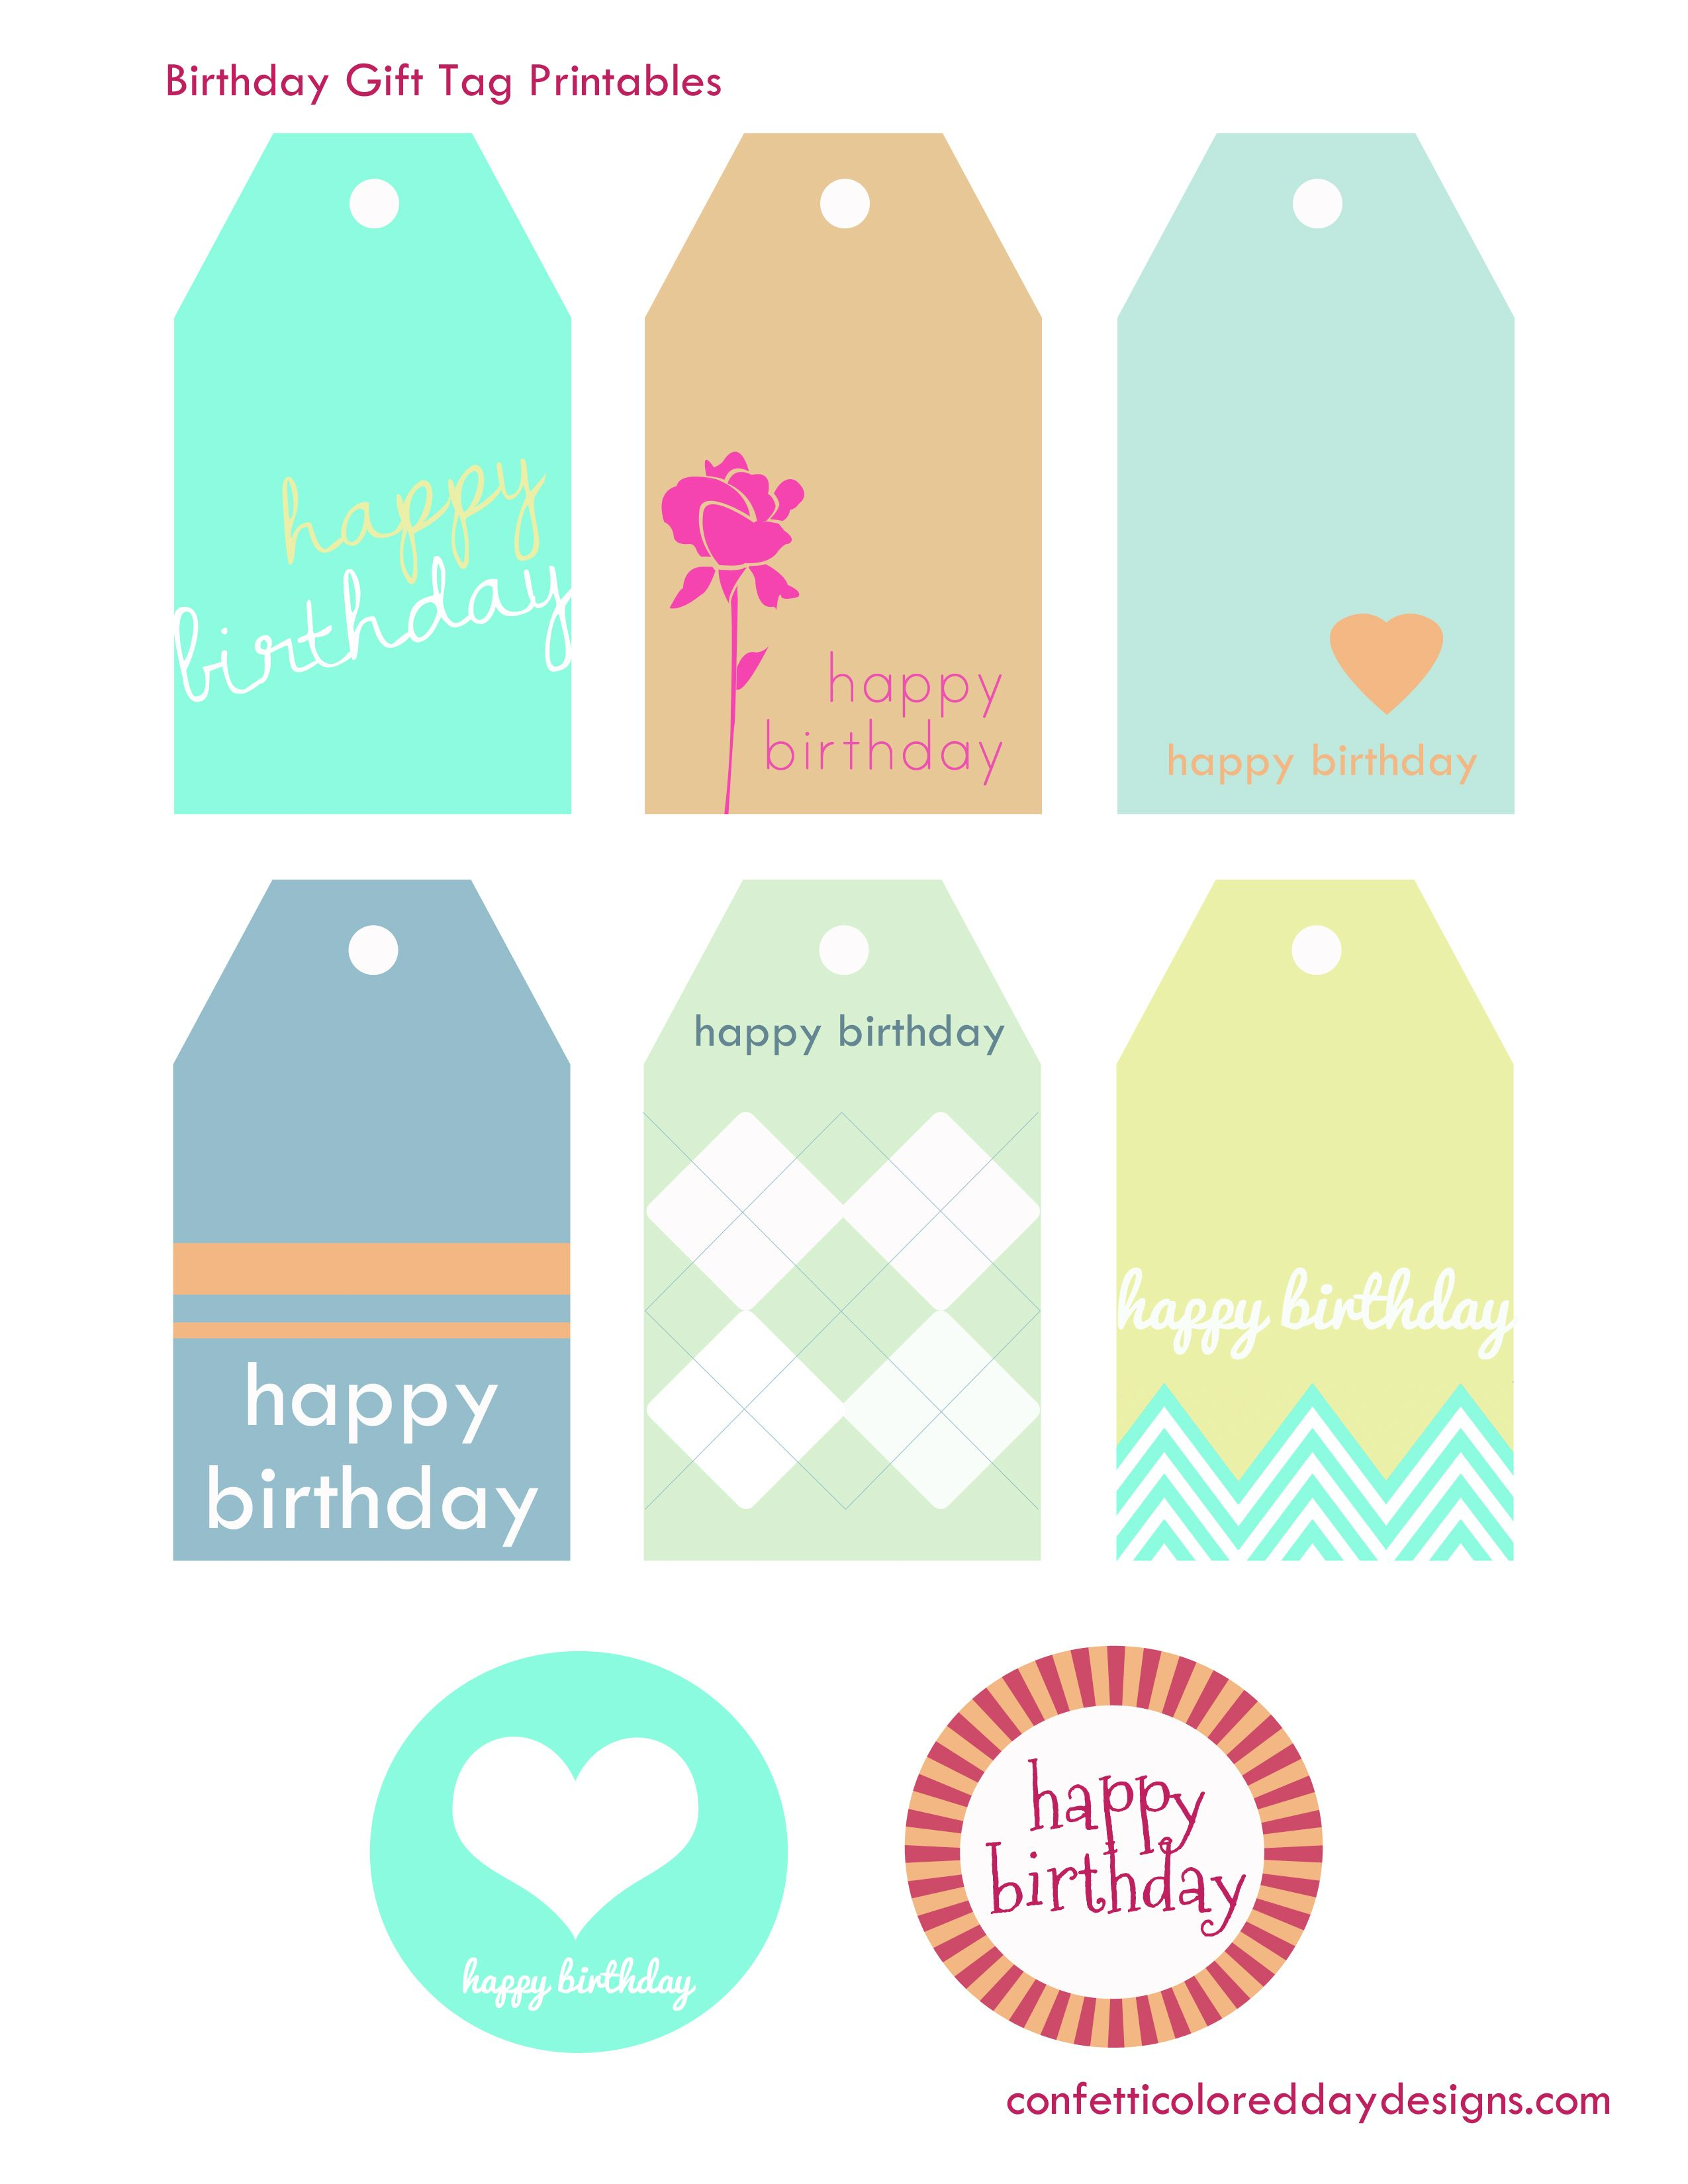 Birthday Invitation Archives | Confetti Colored Day Designs - Free Printable Birthday Tags